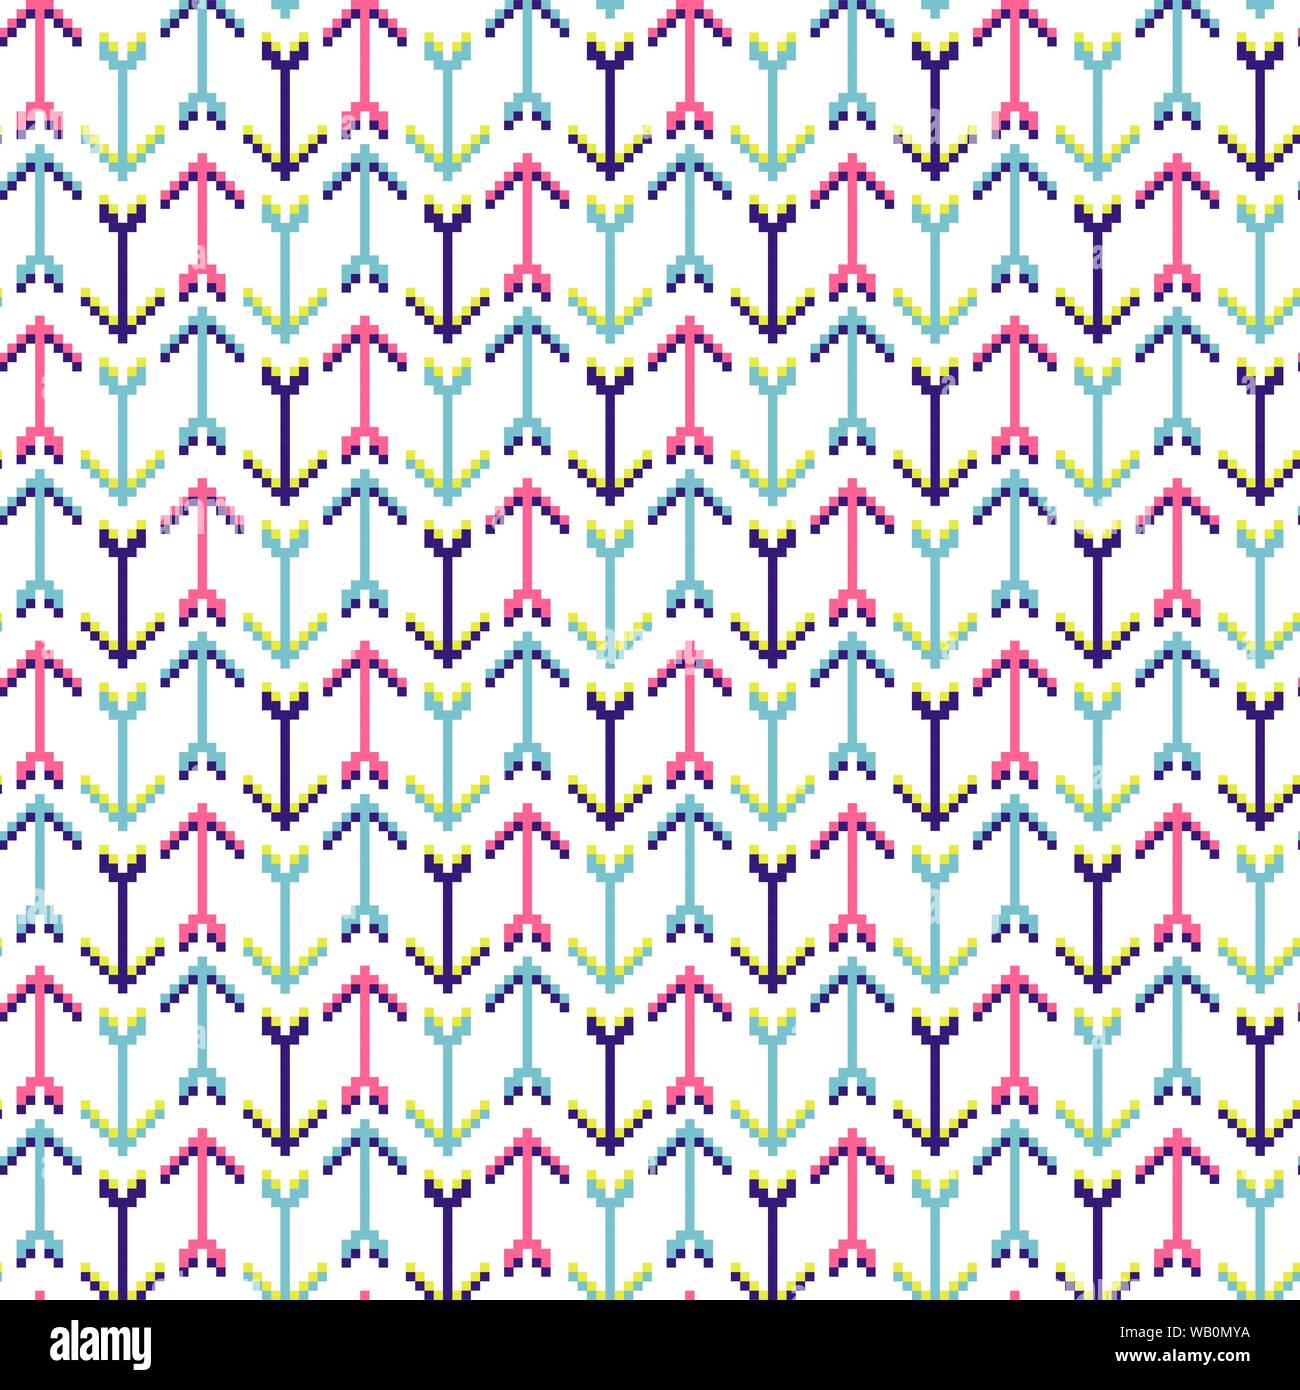 Arrows geometric seamless pattern pixelart texture. Stock Vector